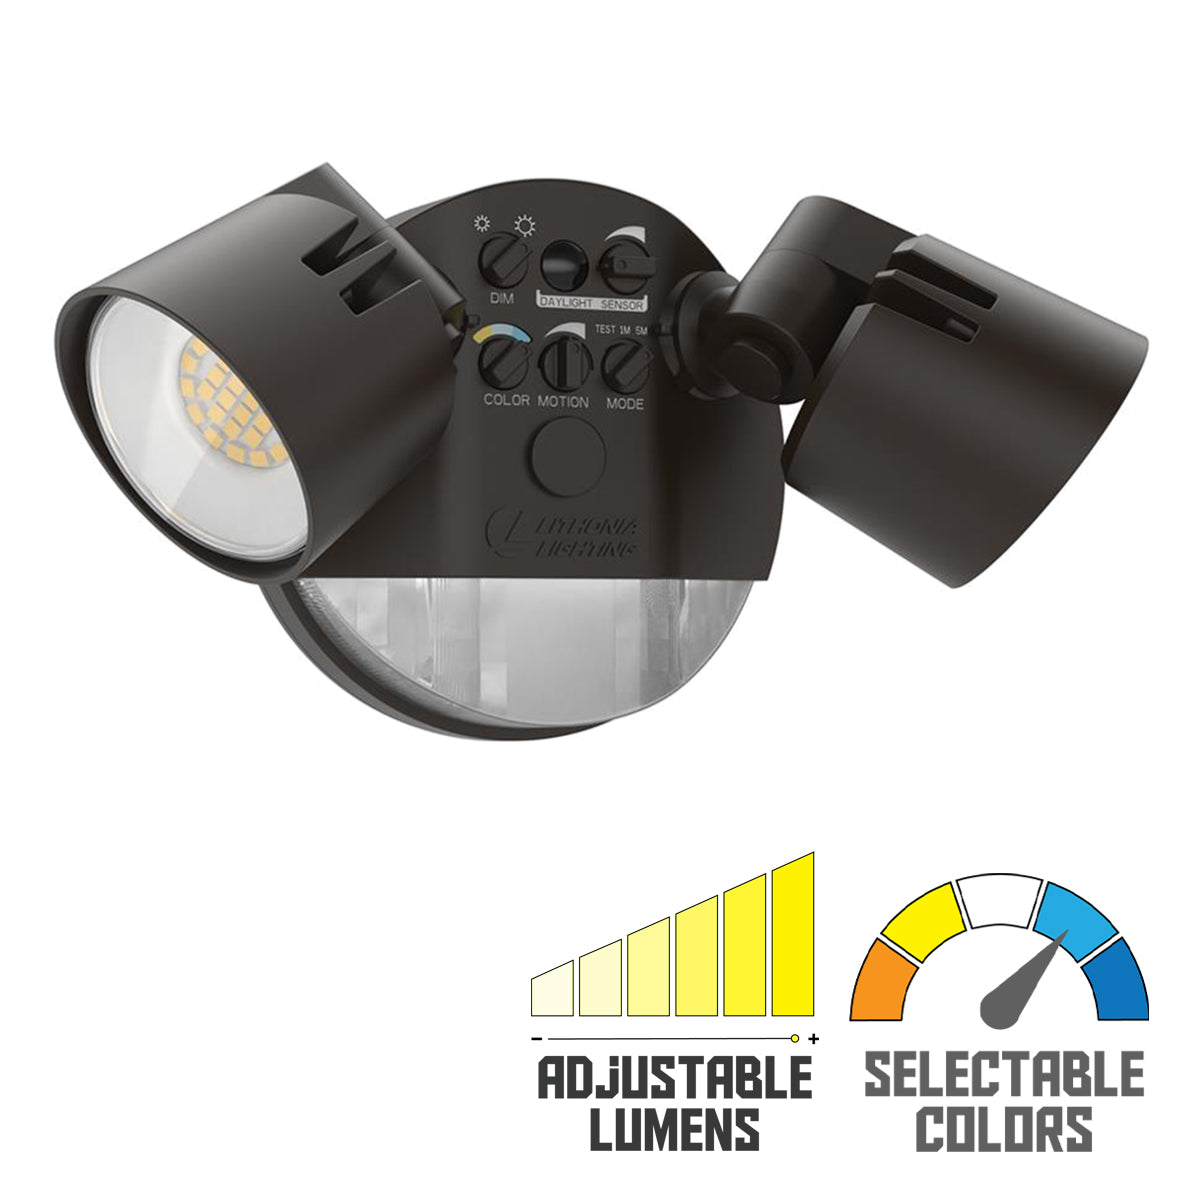 LED Security Flood Light With Motion Sensor, 2150-2600 Lumens, 26 Watt, Selectable CCT, Adjustable 2-Head, Bronze Finish